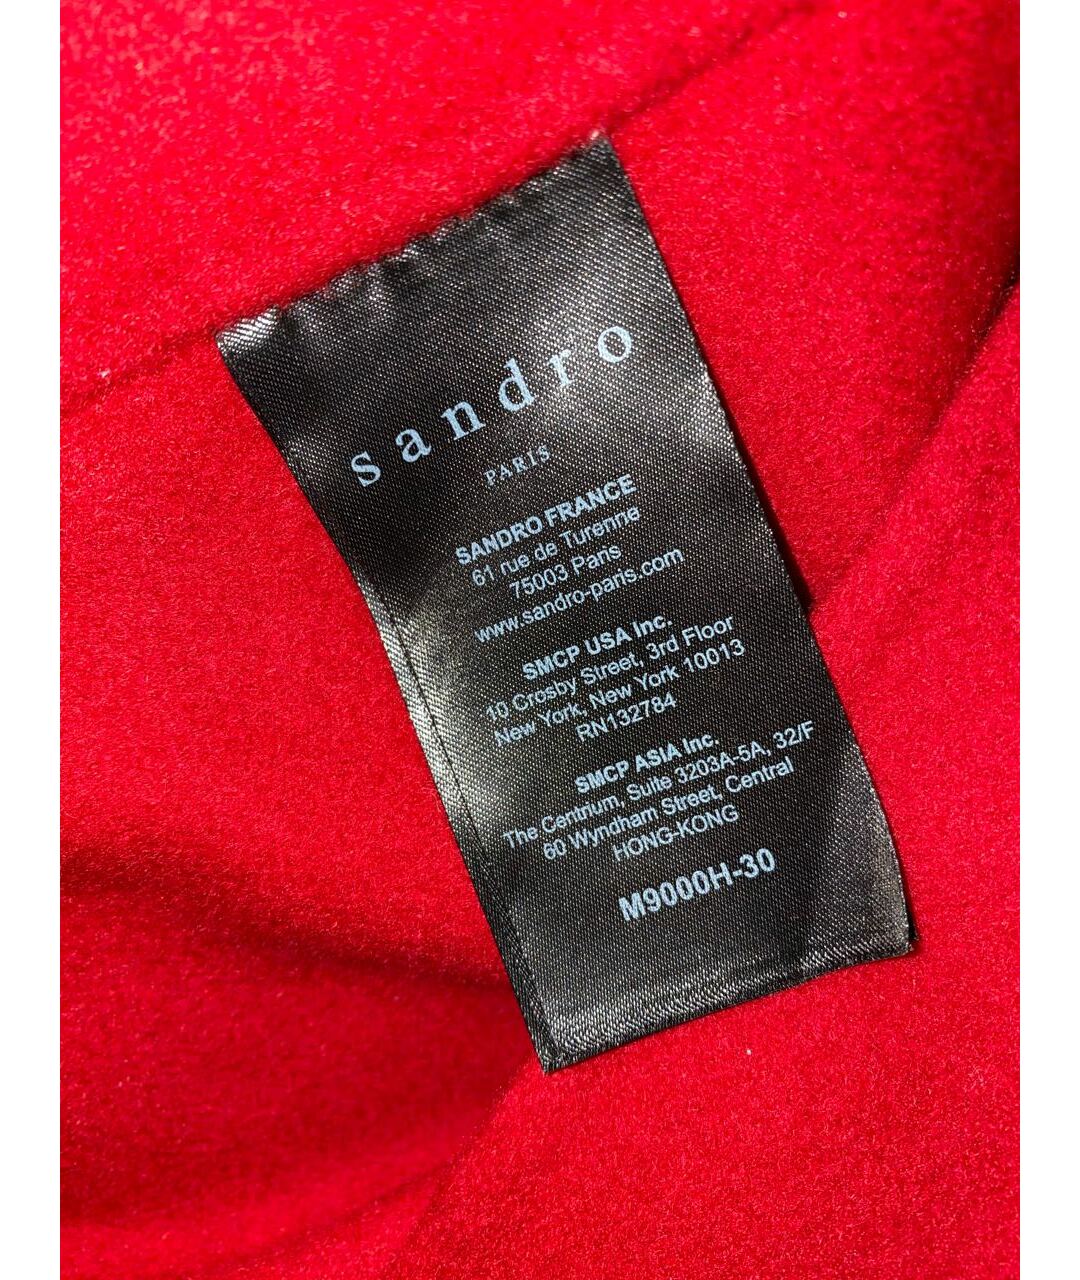 SANDRO Красное шерстяное пальто, фото 3